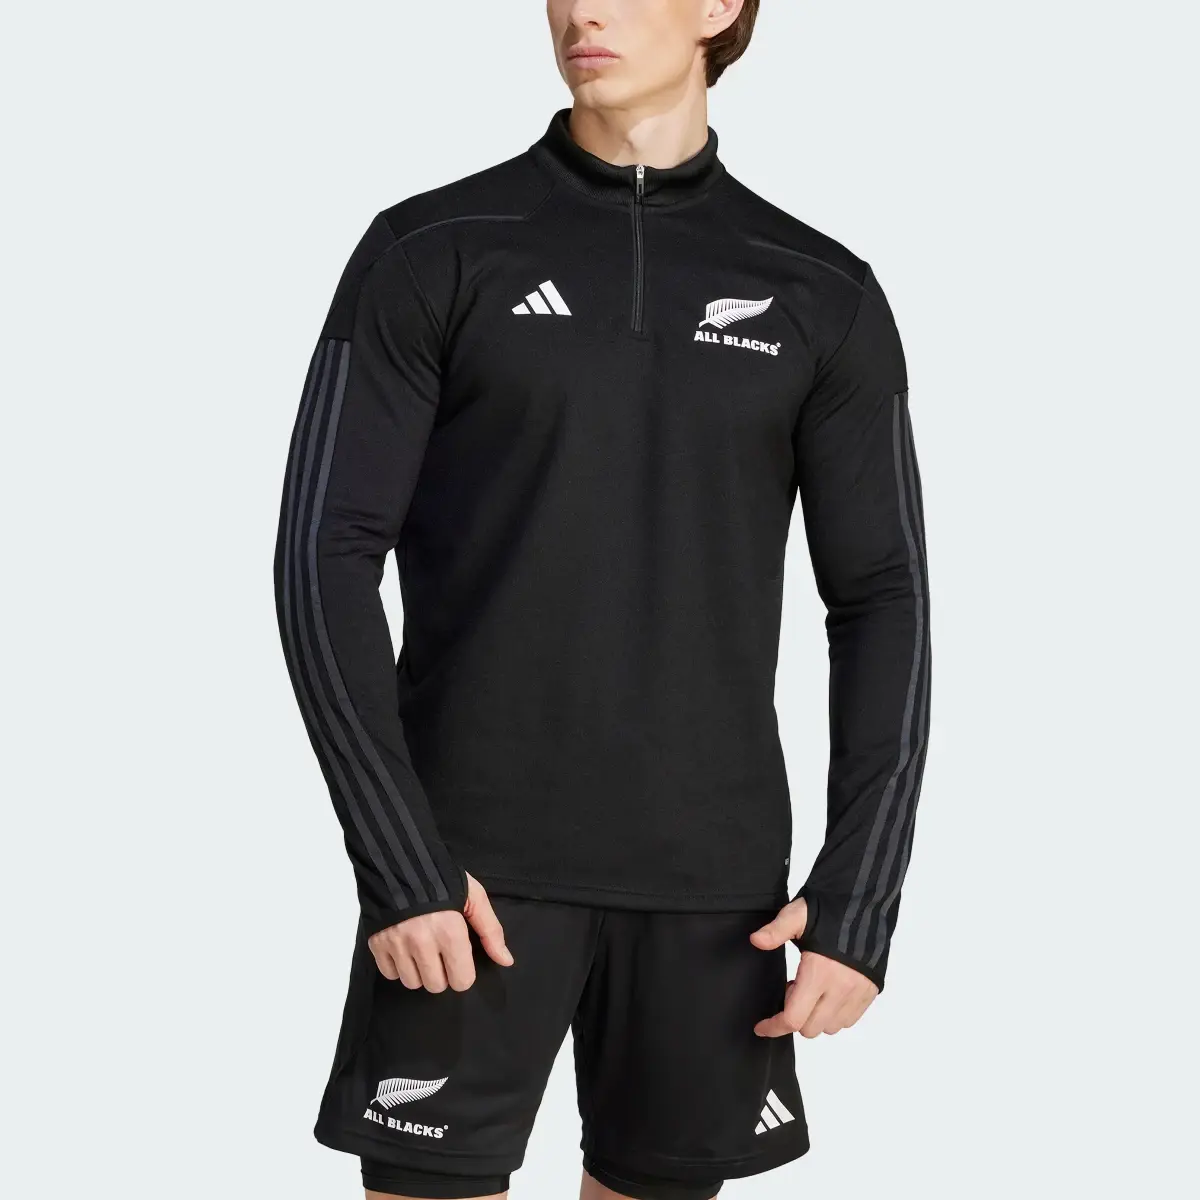 Adidas All Blacks AEROREADY Warming Long Sleeve Fleece Top. 1